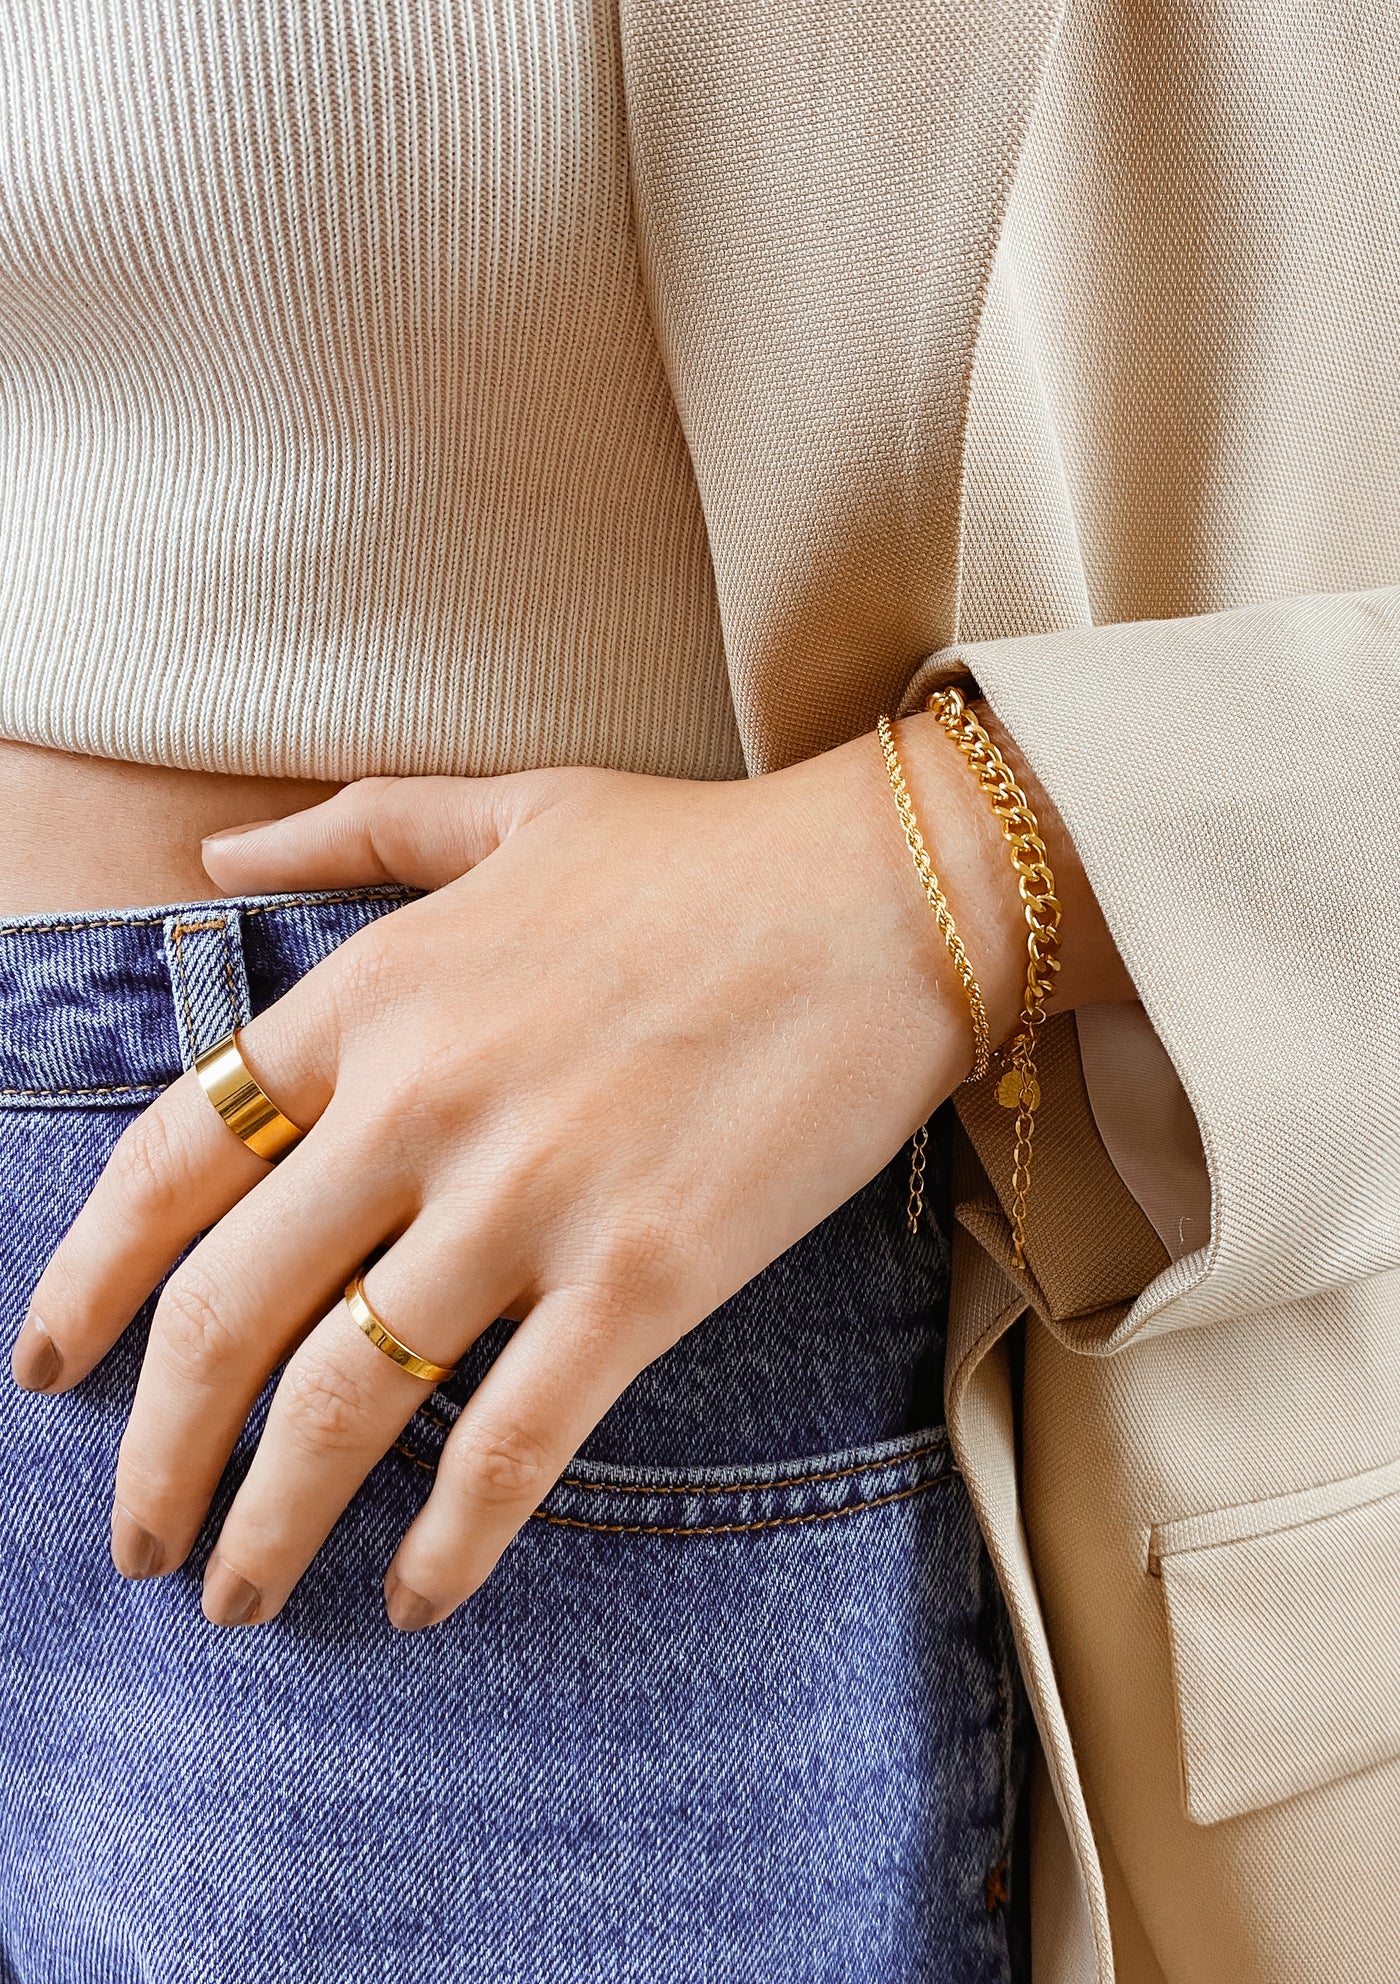 Gold Chain Bracelets Women | Bracelet Fashion Jewelry Gold | Bracelet Gold  Color Women - Bracelets - Aliexpress